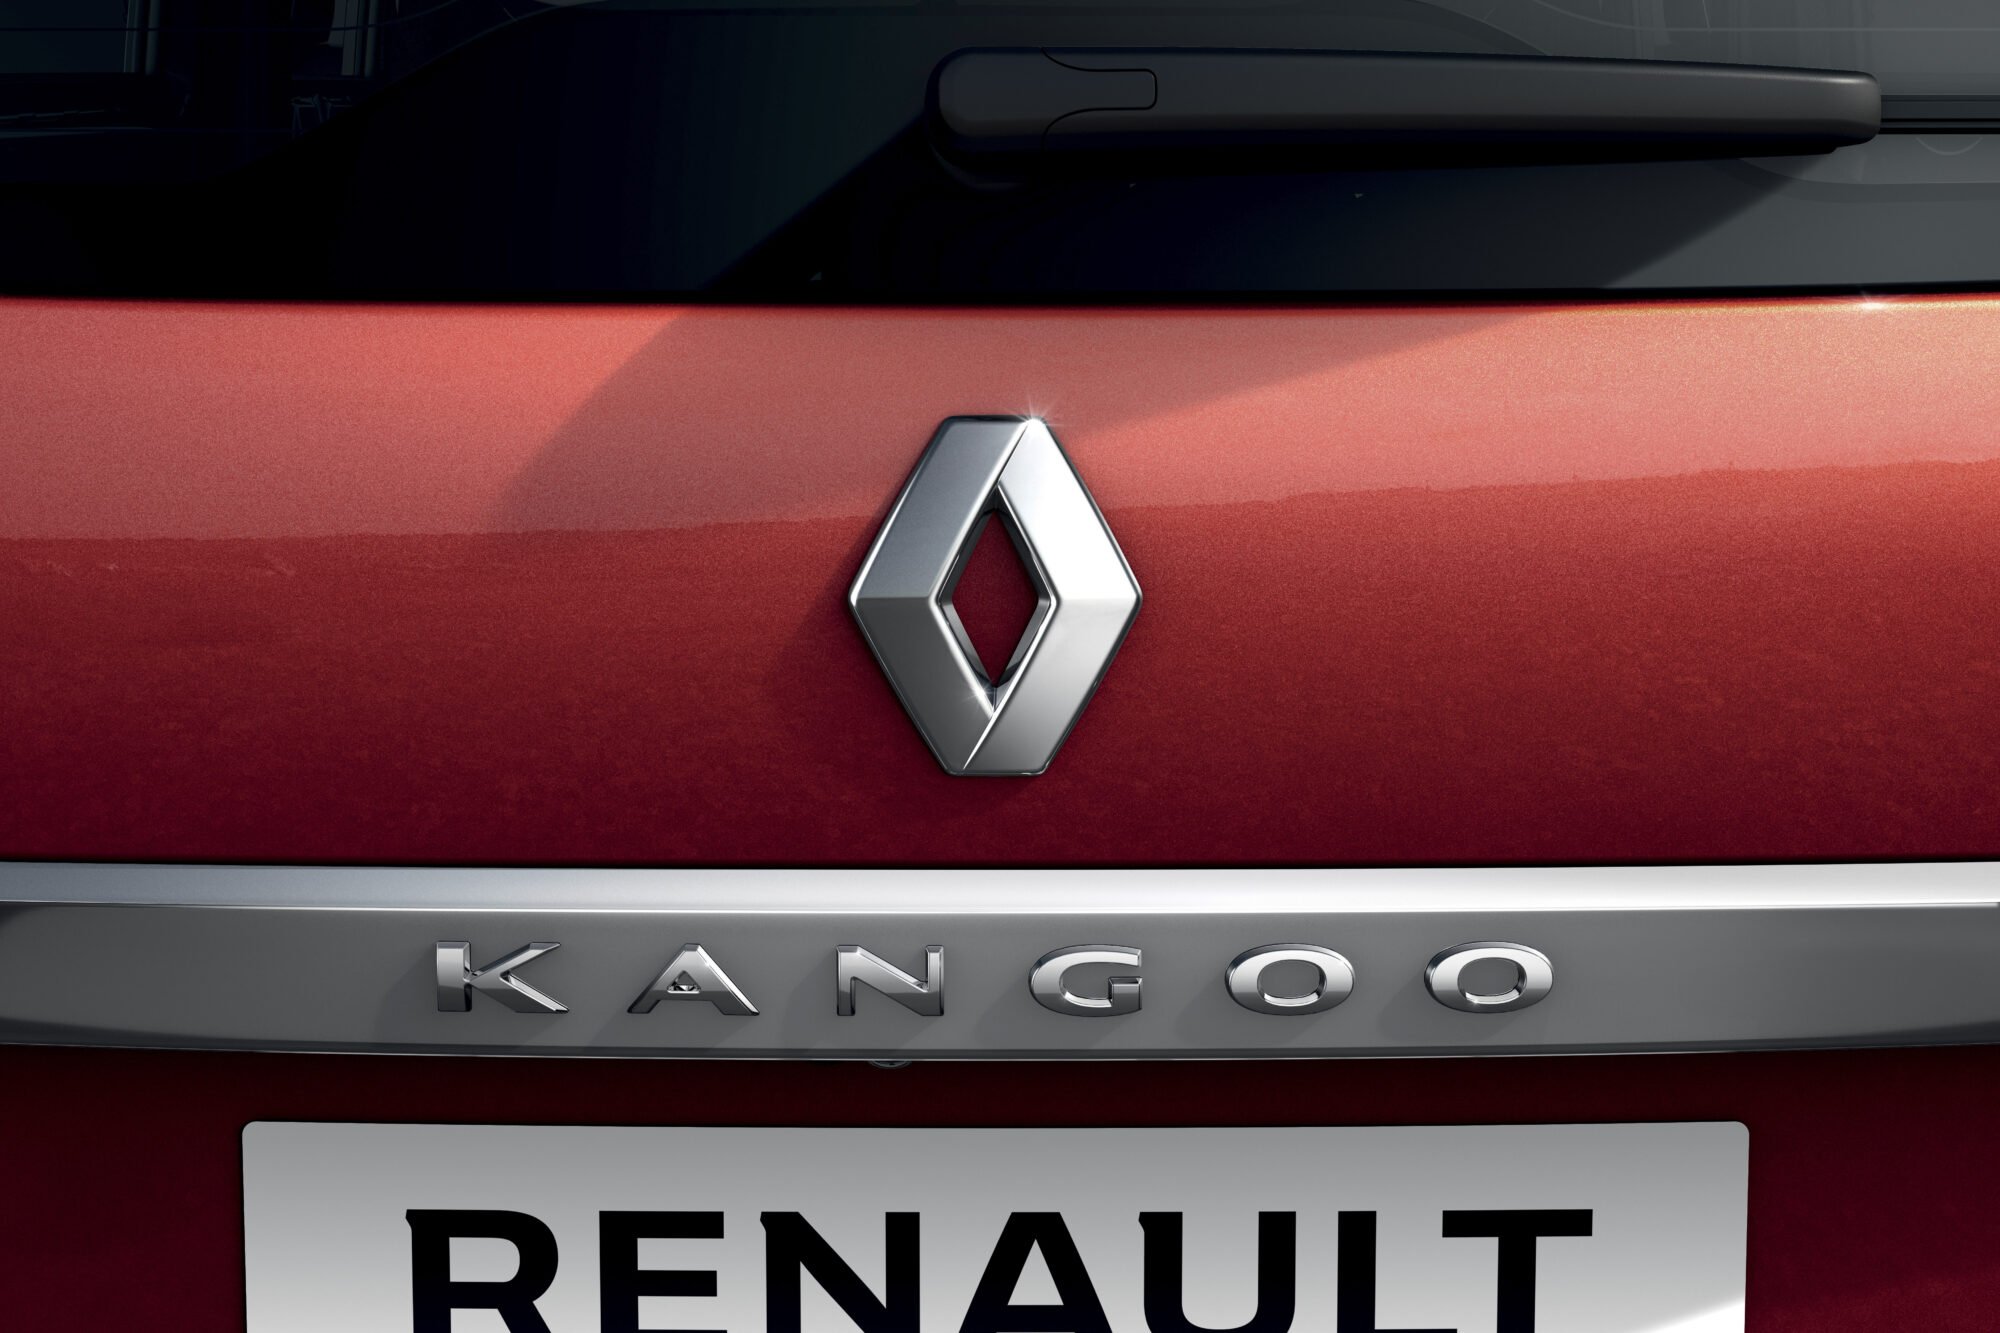 2021 - New Renault Kangoo - In studio